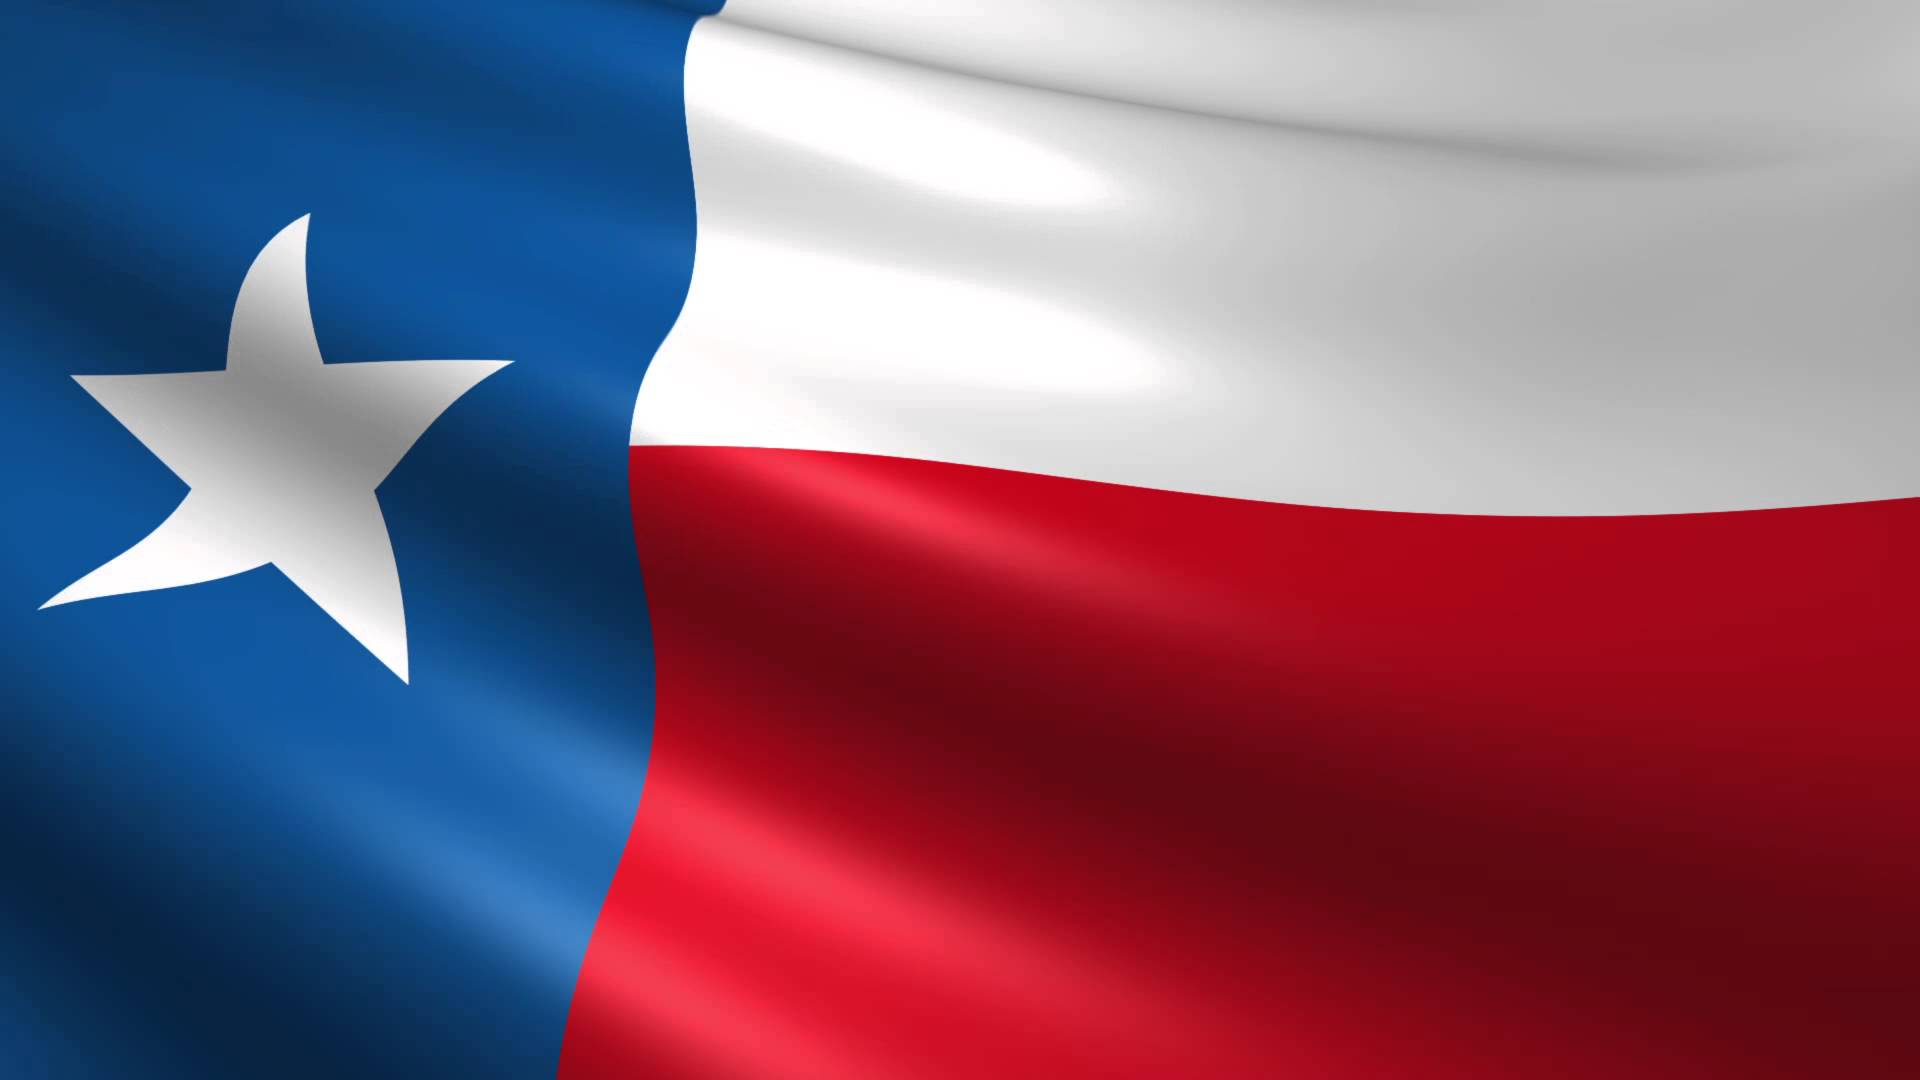 Texas Flag Wallpapers Group